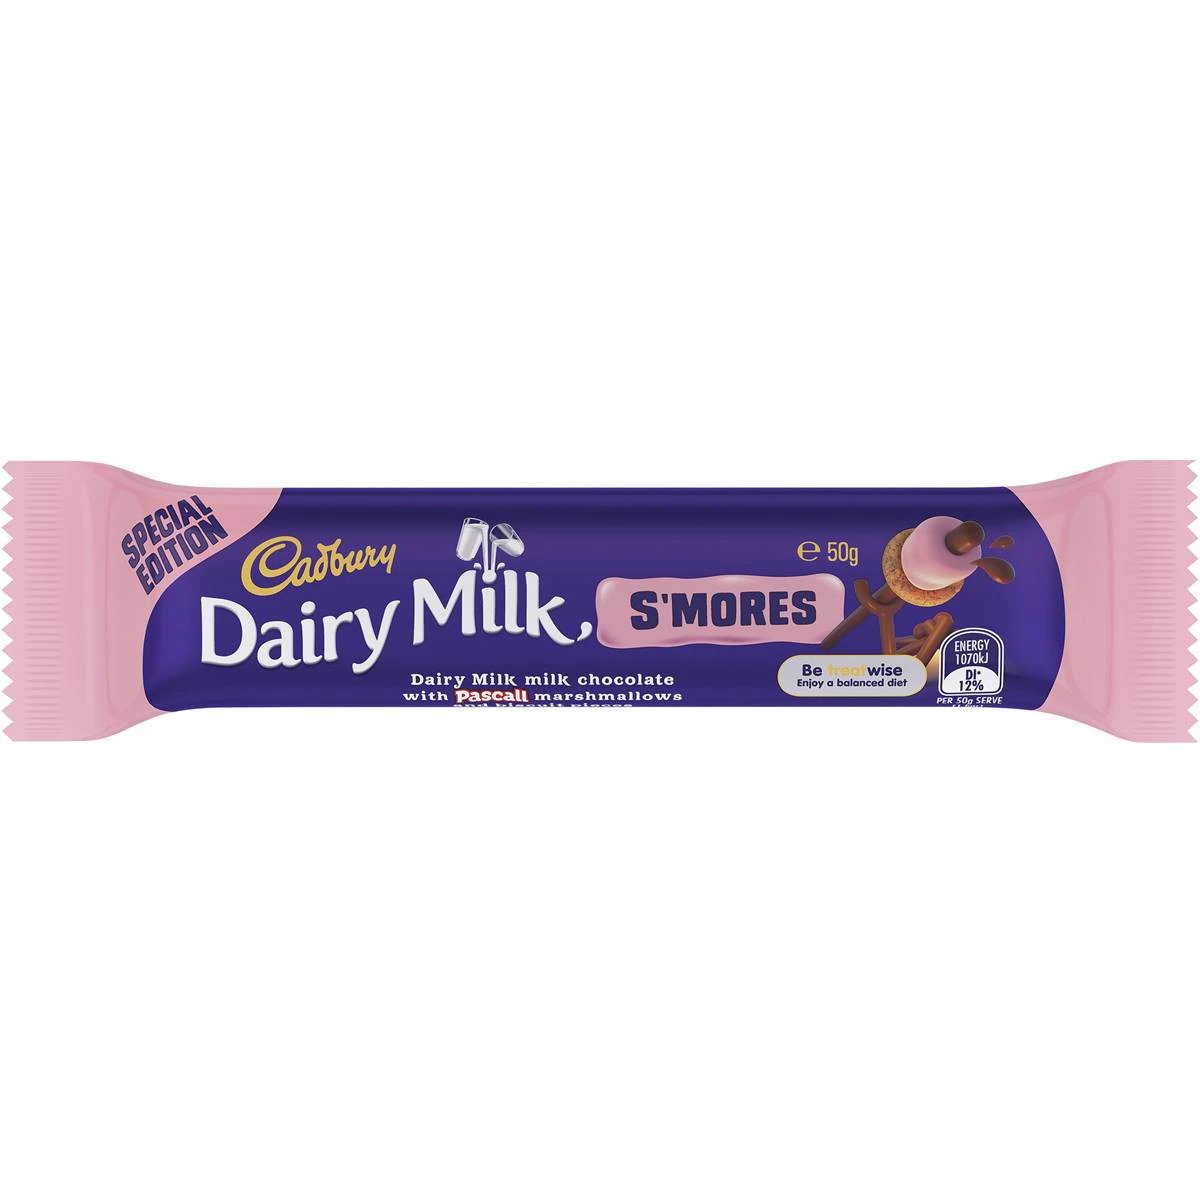 Cadbury Dairy Milk S'mores 50g